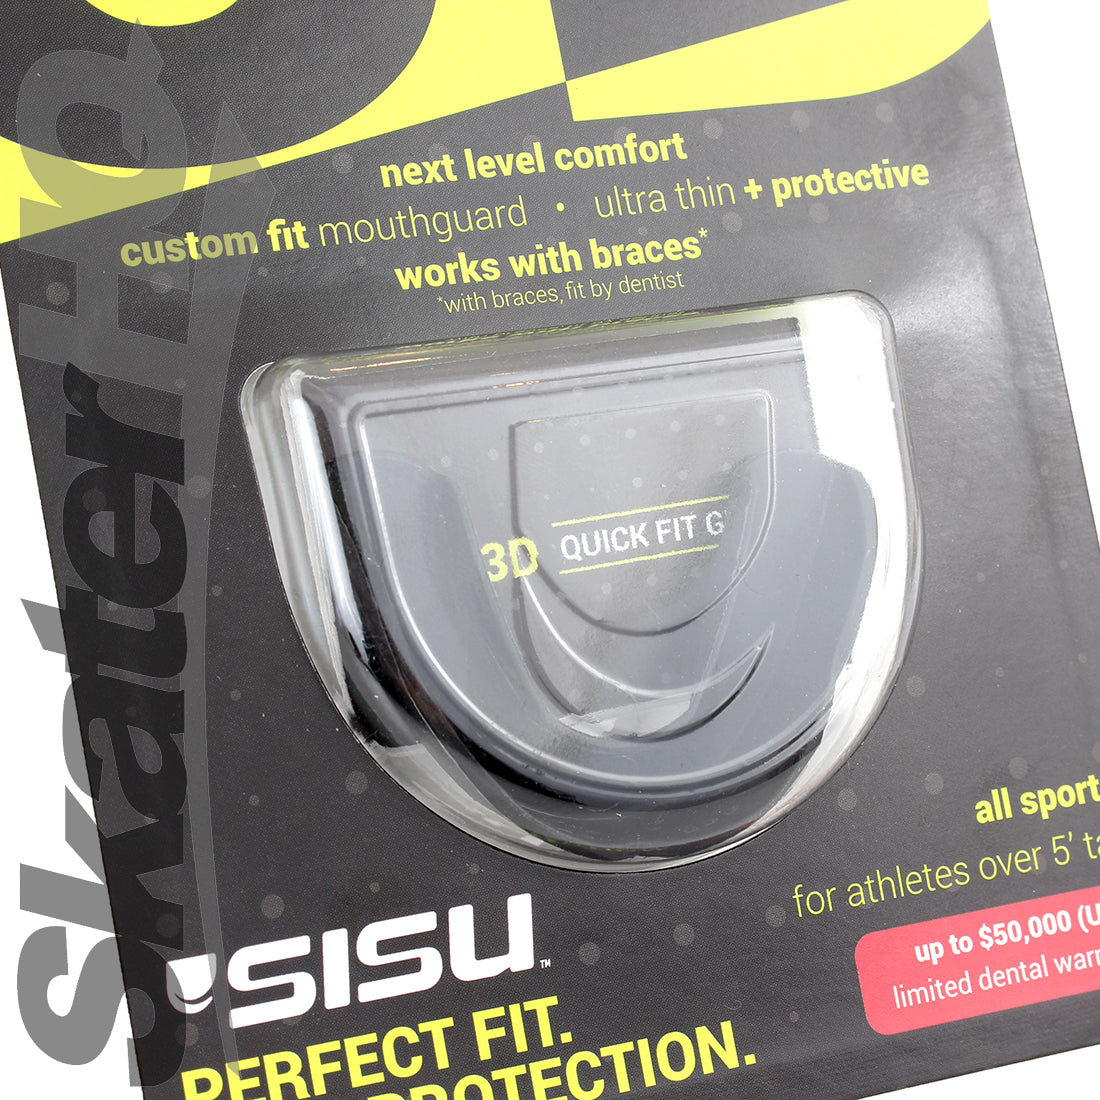 SISU 3D Adult Mouthguard - Charcoal Black Protective Mouthguards